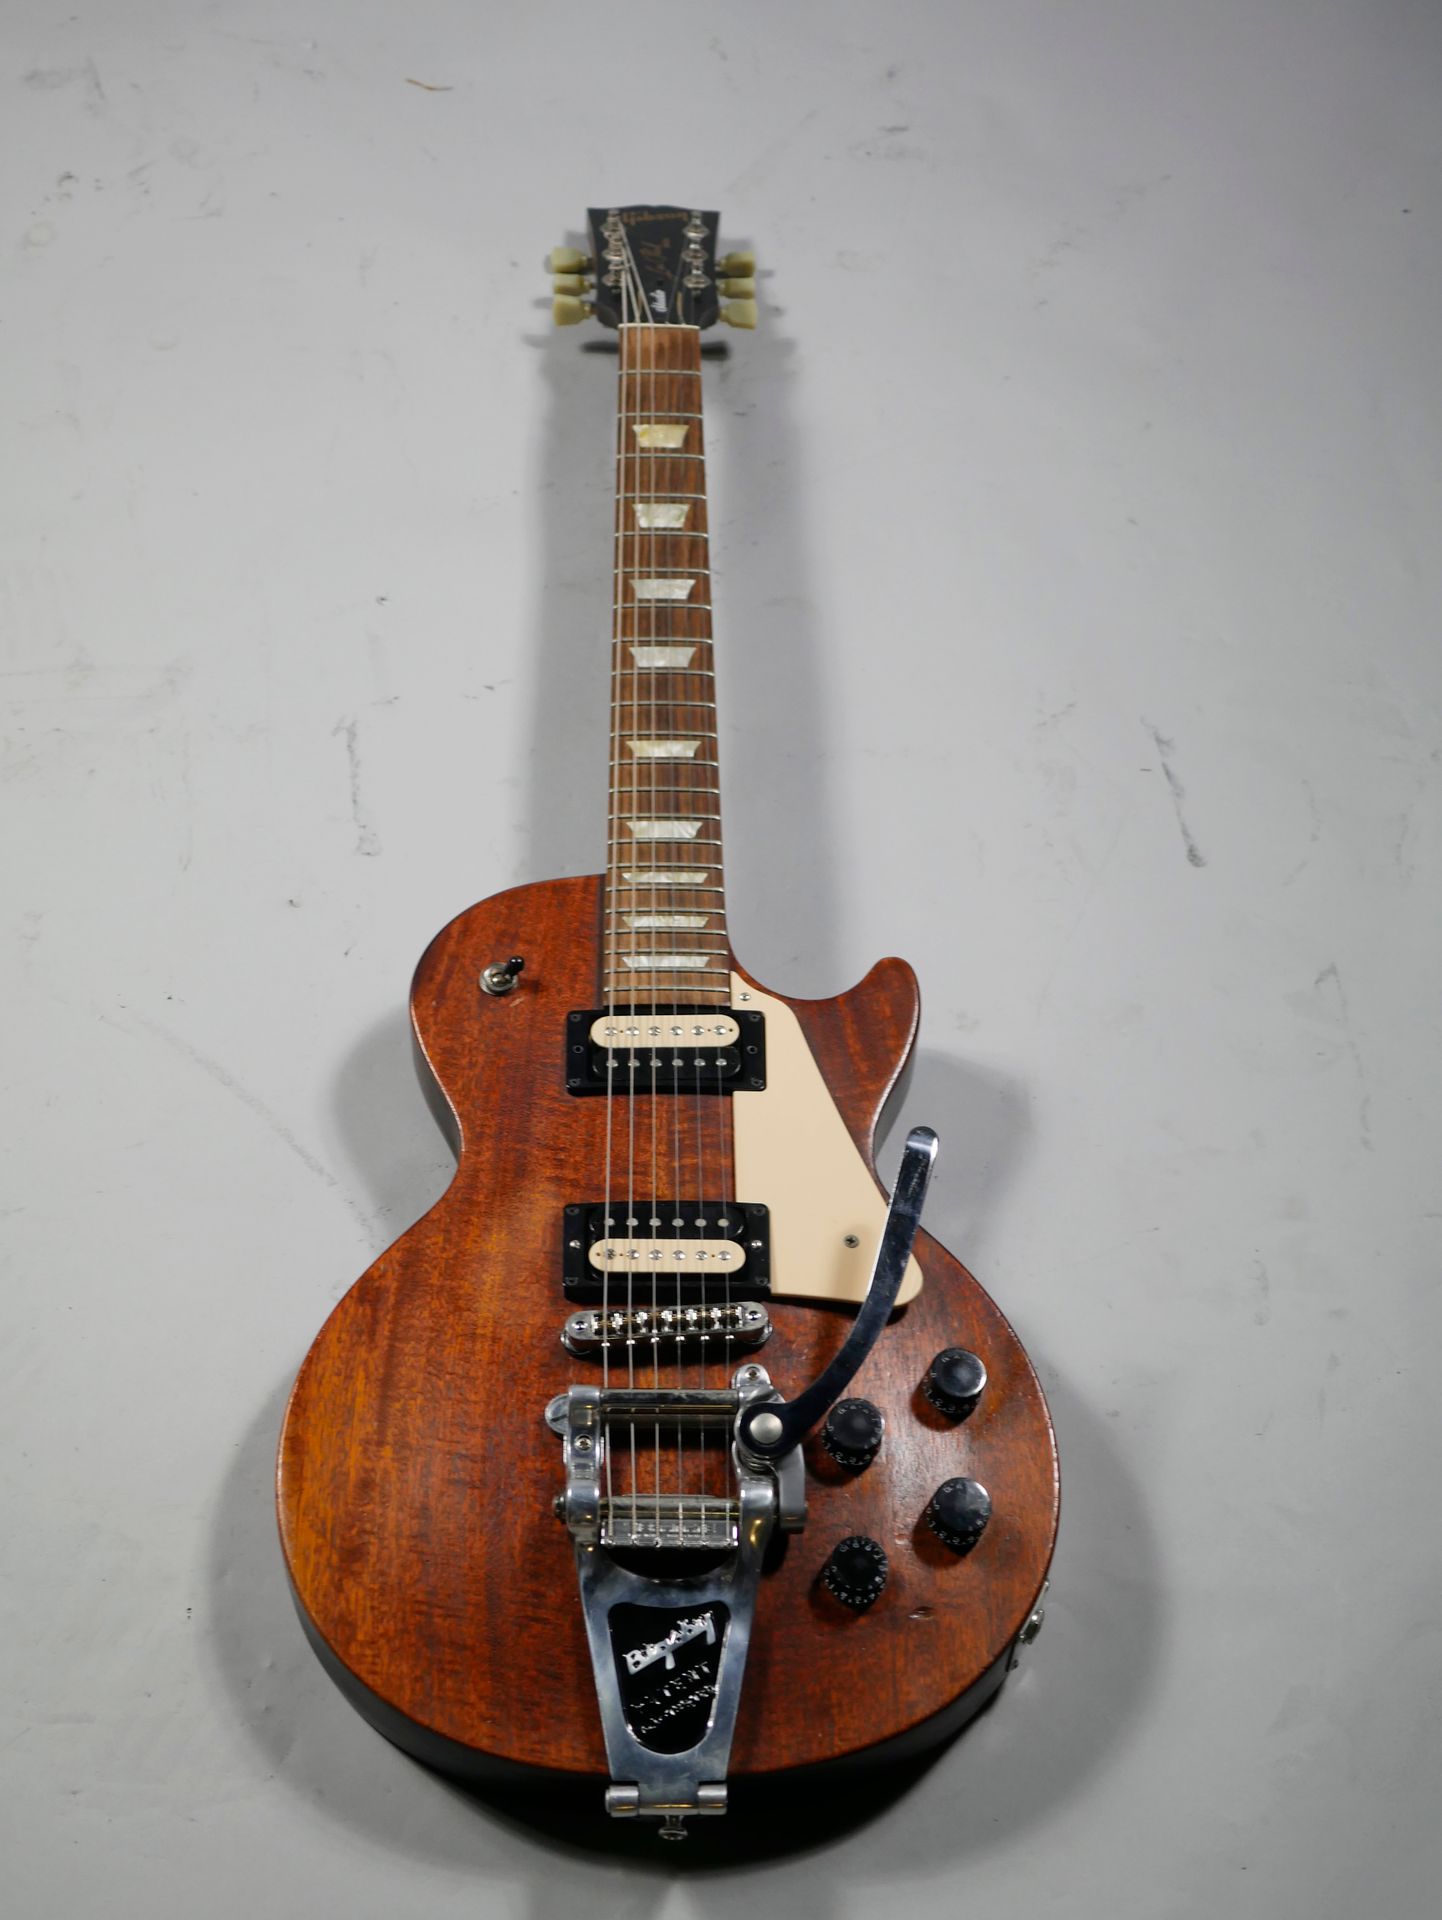 Null 吉布森实心电吉他型号Les Paul Studio，约2007年在美国制造，胡桃木饰面。

后来又增加了Bigsby，并进行了修改。准备好播放，原箱。&hellip;